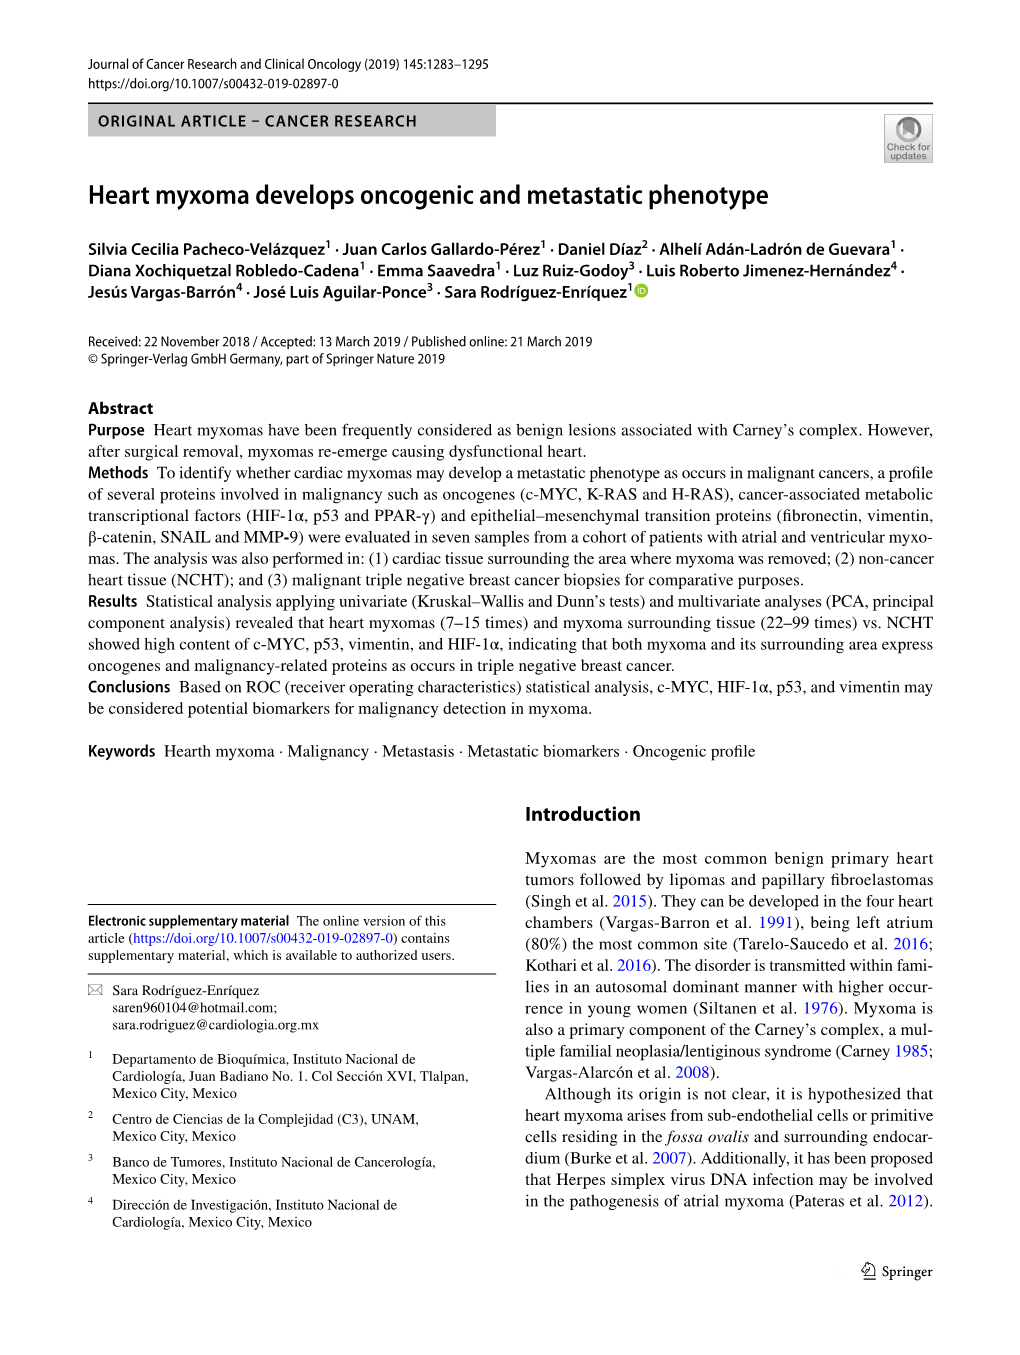 Heart Myxoma Develops Oncogenic and Metastatic Phenotype